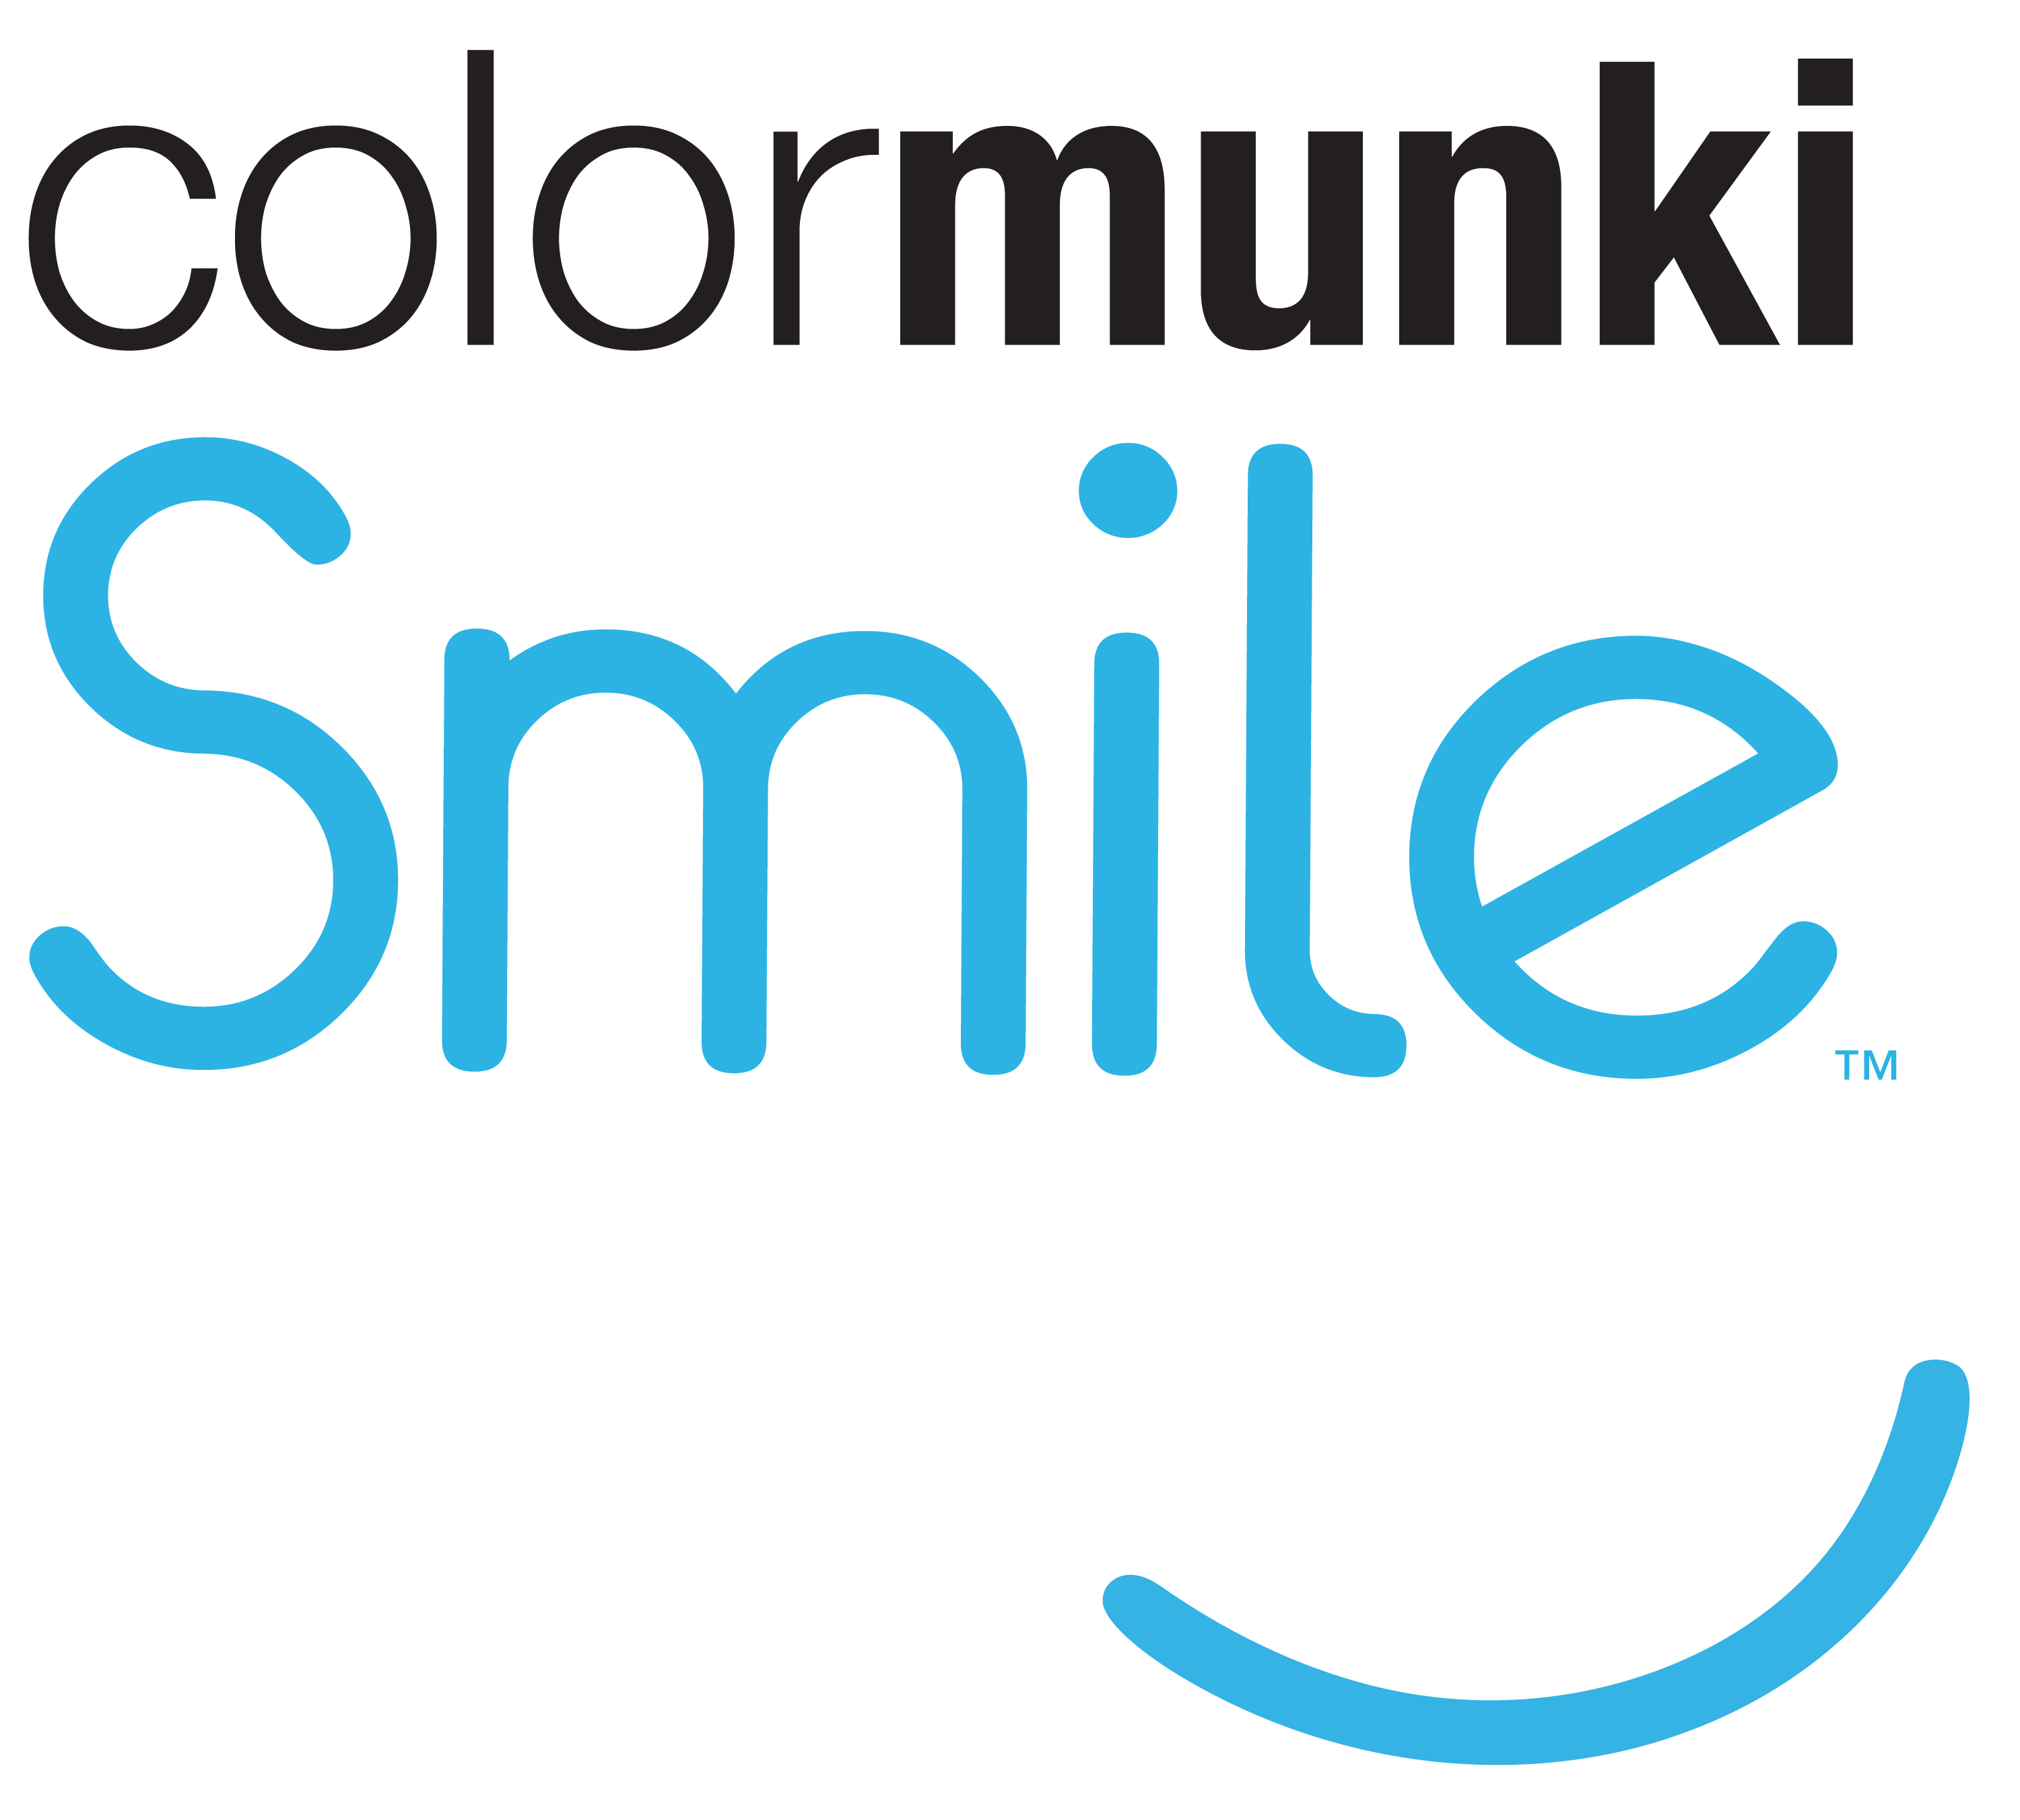 Color Munki Logo photo - 1